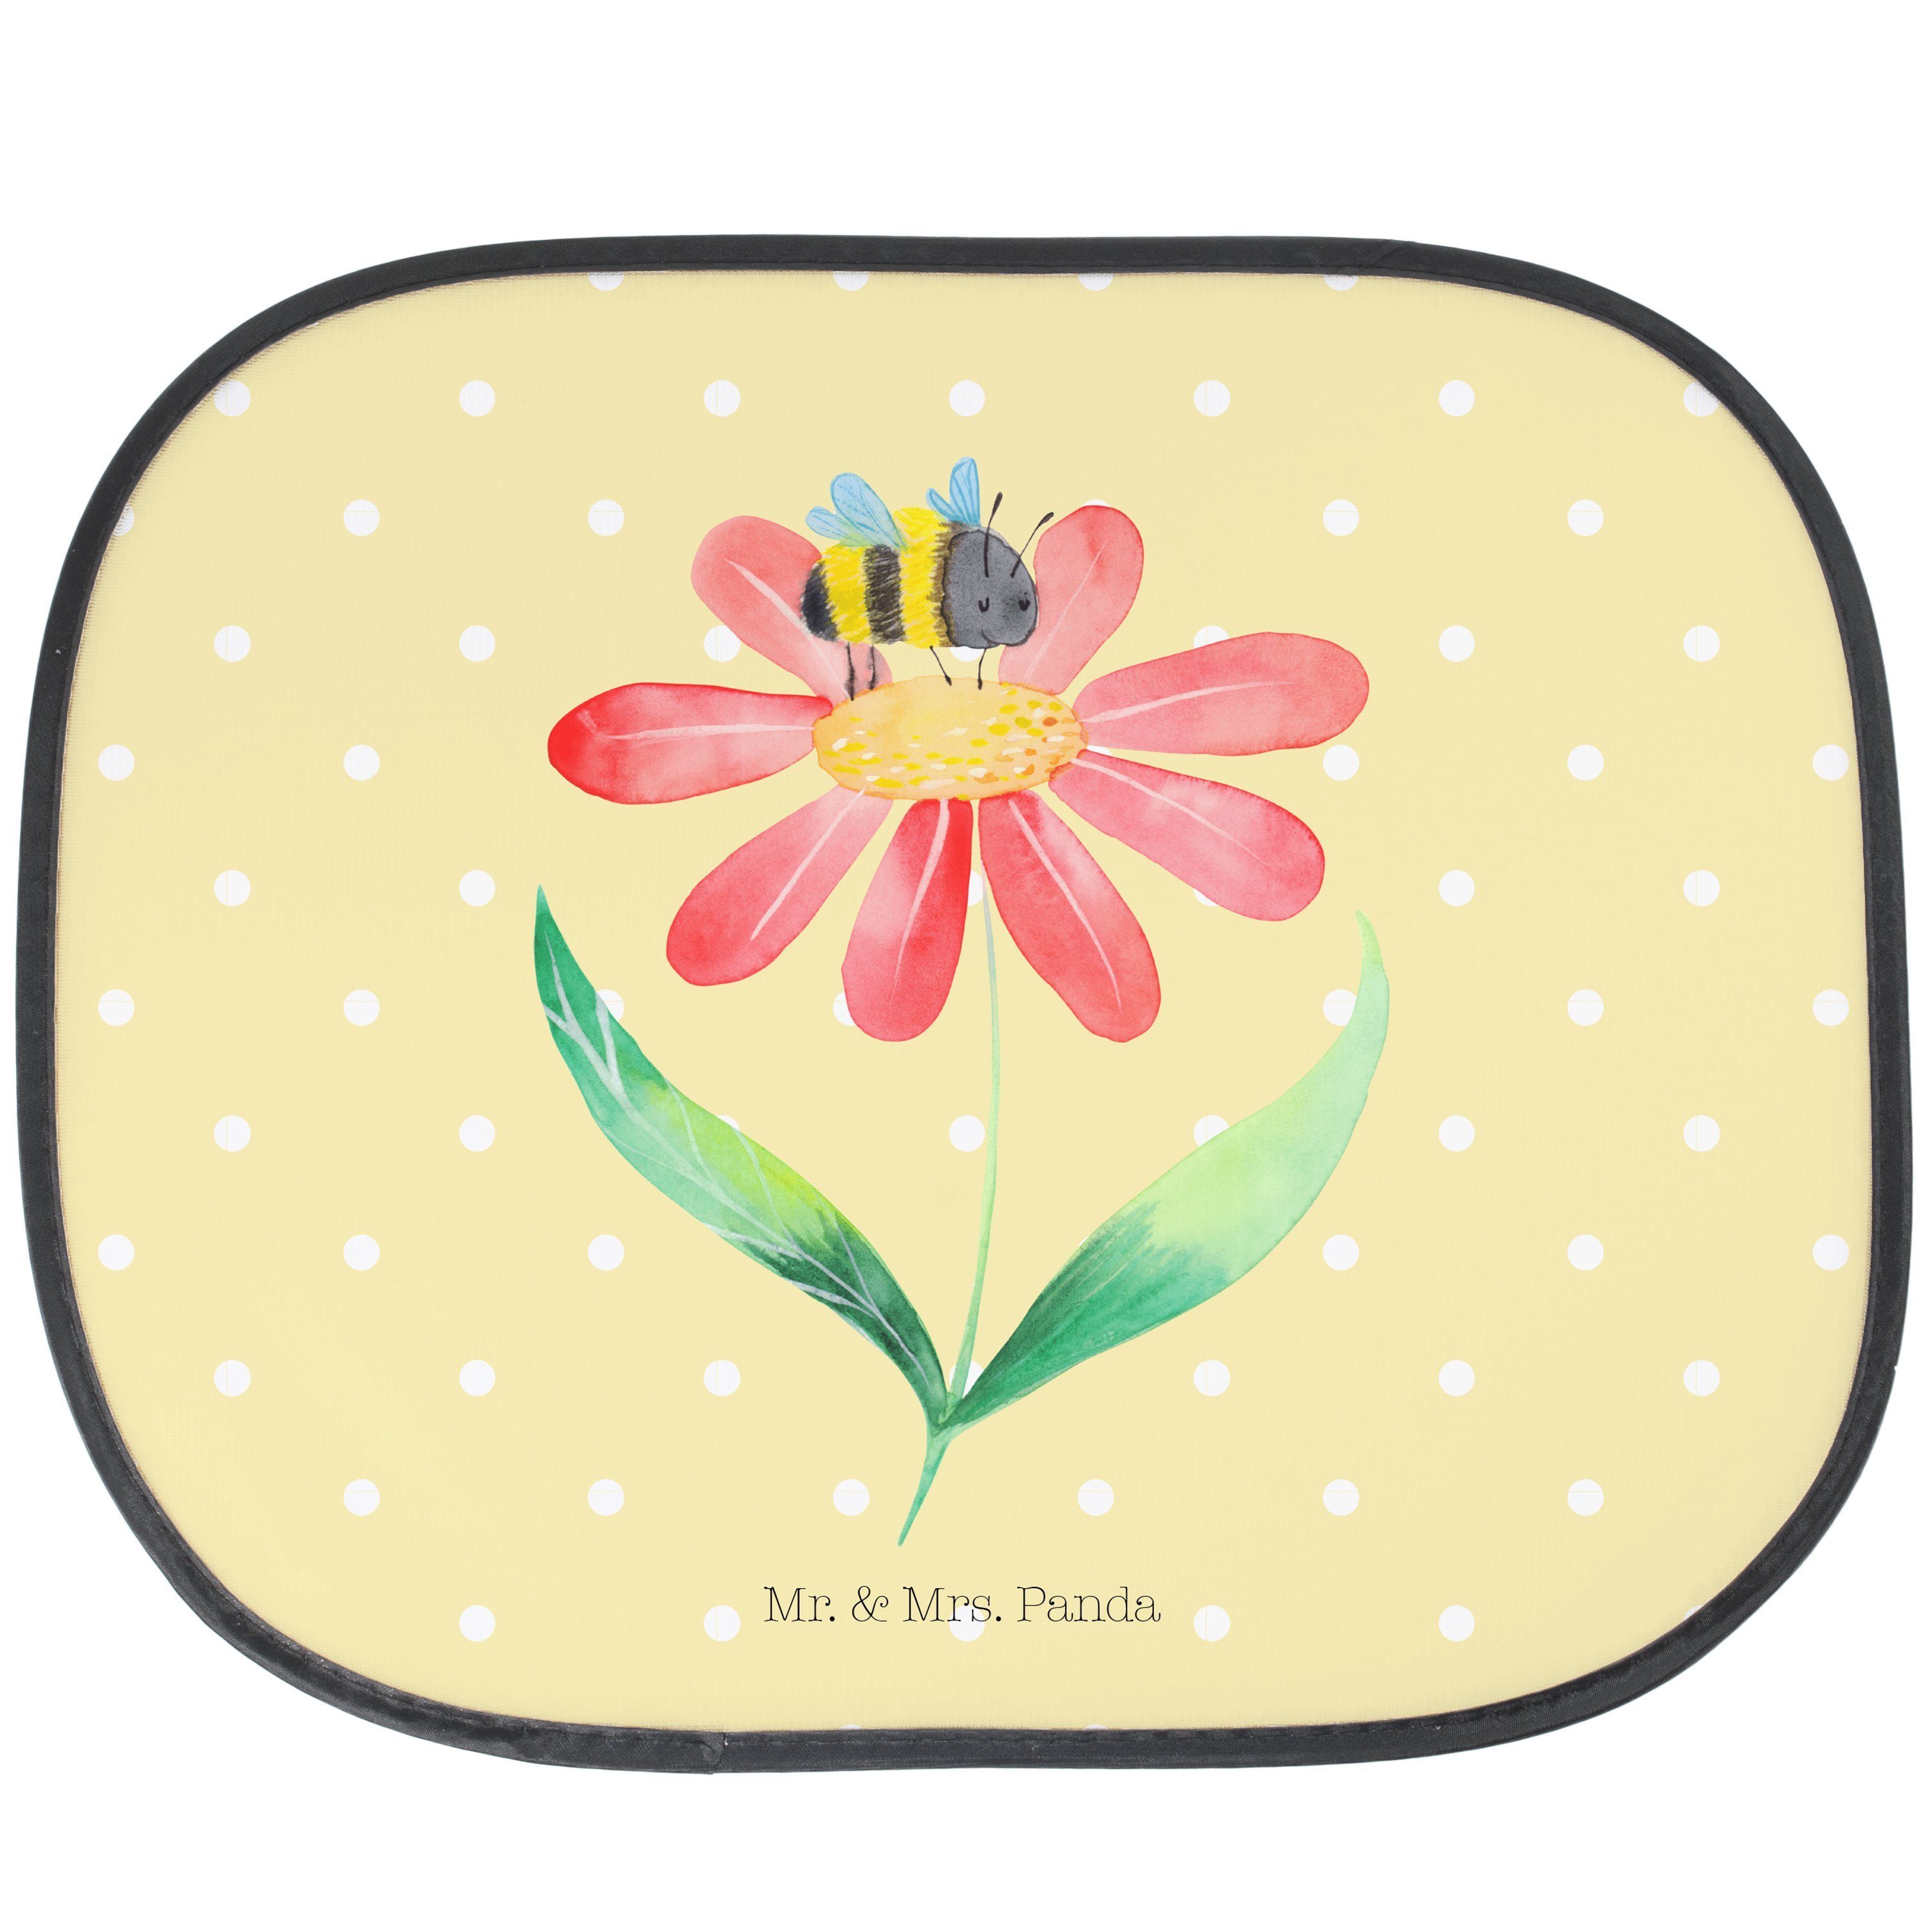 Sonnenschutz Hummel Blume - Gelb Pastell - Geschenk, Sonne Auto, Sonnenblende, Son, Mr. & Mrs. Panda, Seidenmatt